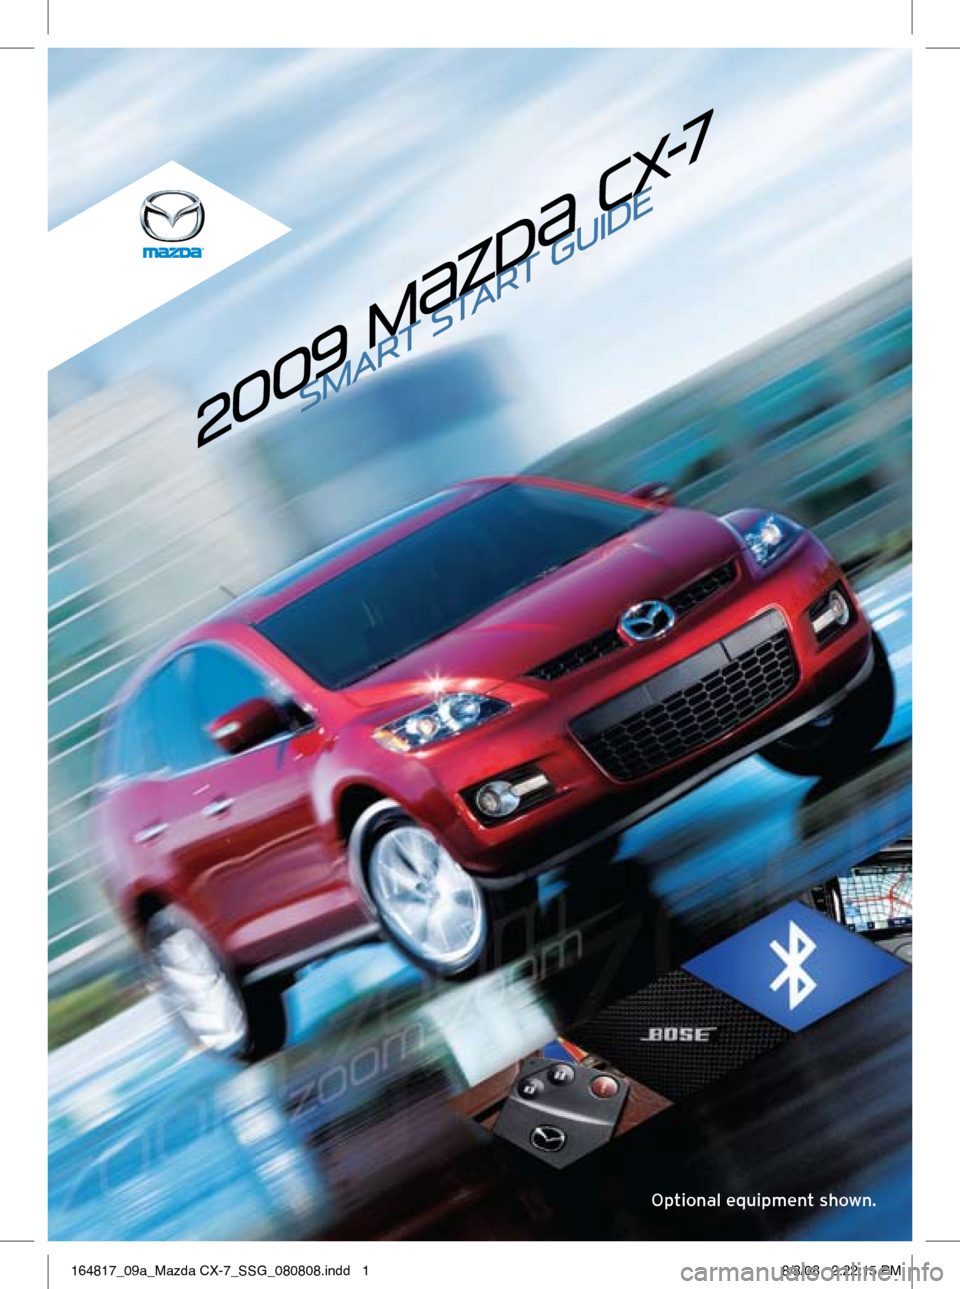 MAZDA MODEL CX-7 2009  Smart Start Guide (in English) 